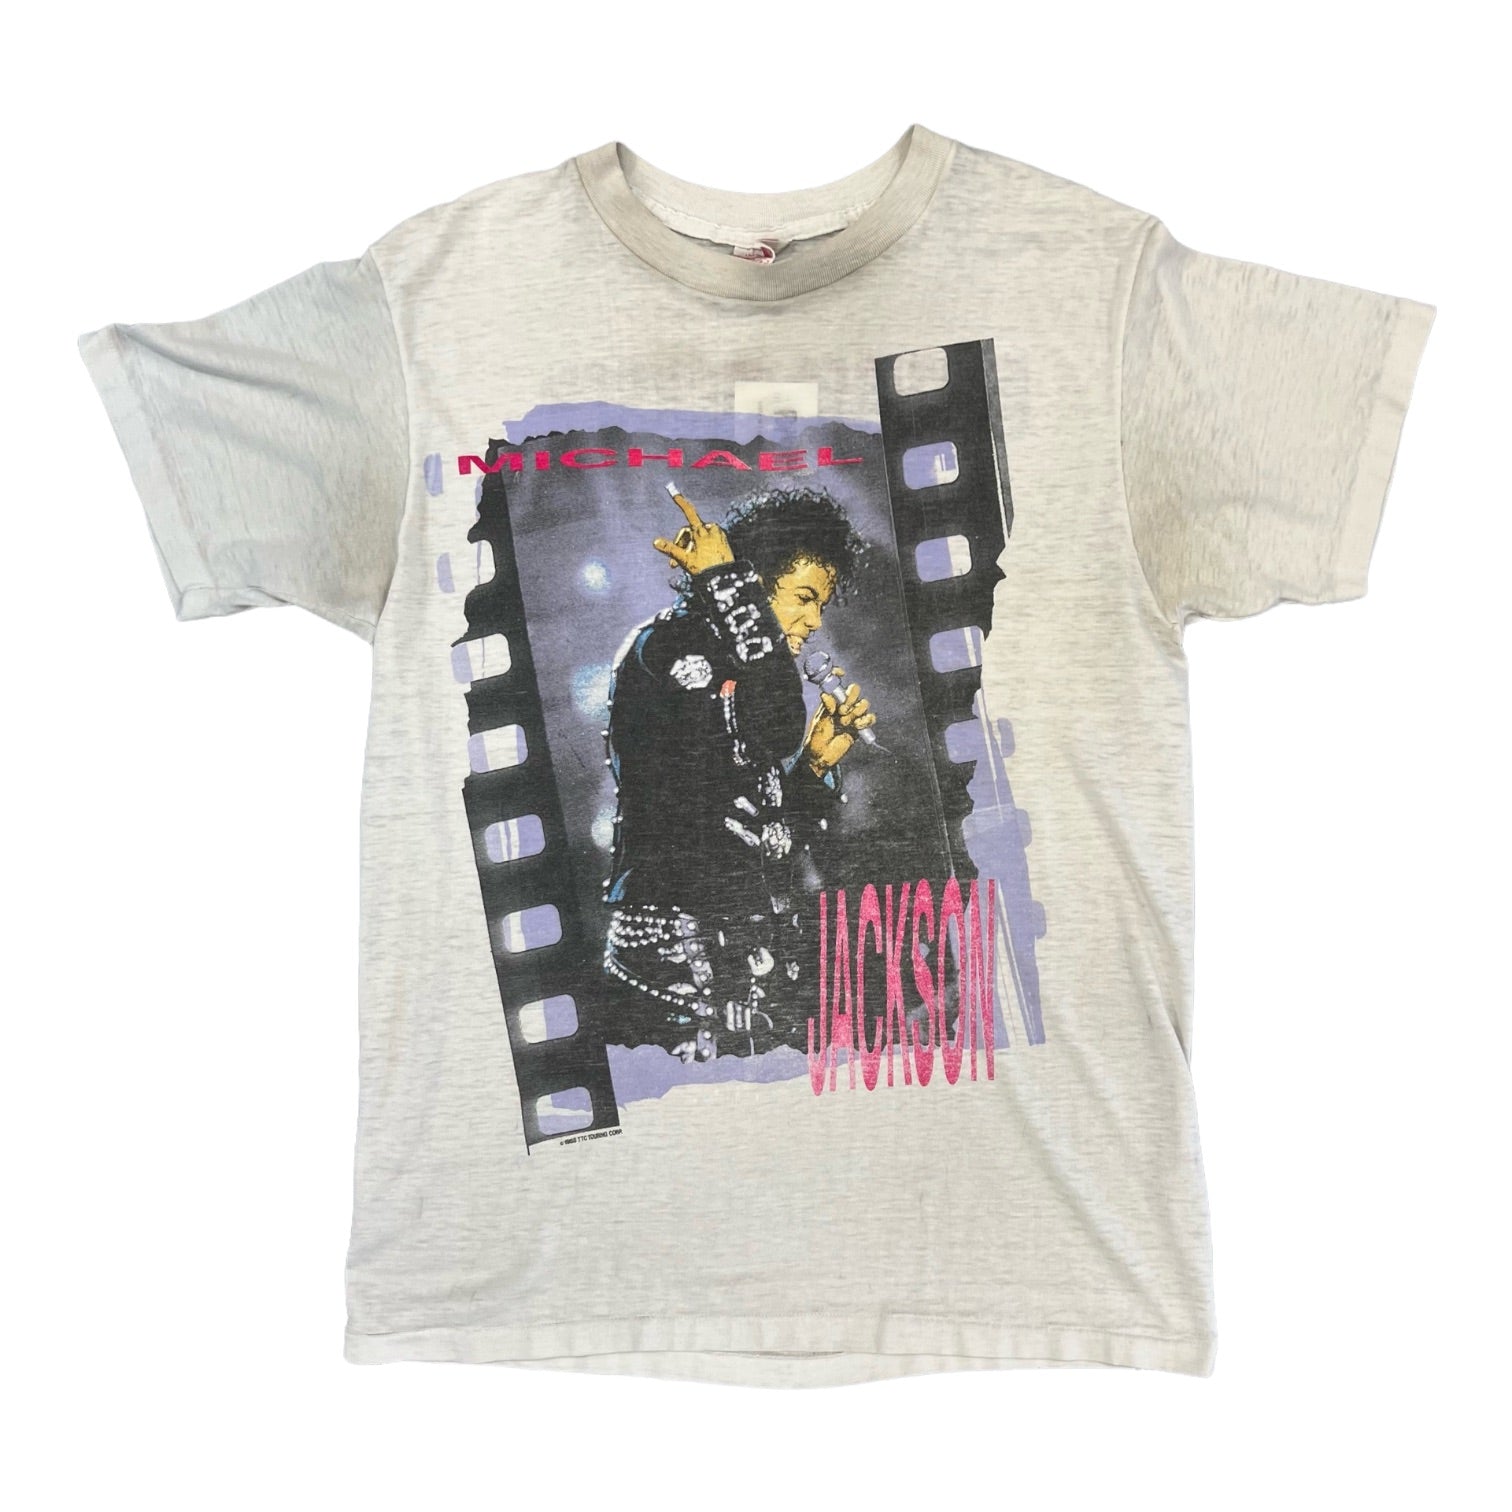 Michael Jackson Bad Tour 88 T-Shirt Shirt Fan Gifts Vintage Sweatshirt  Unisex - AnniversaryTrending